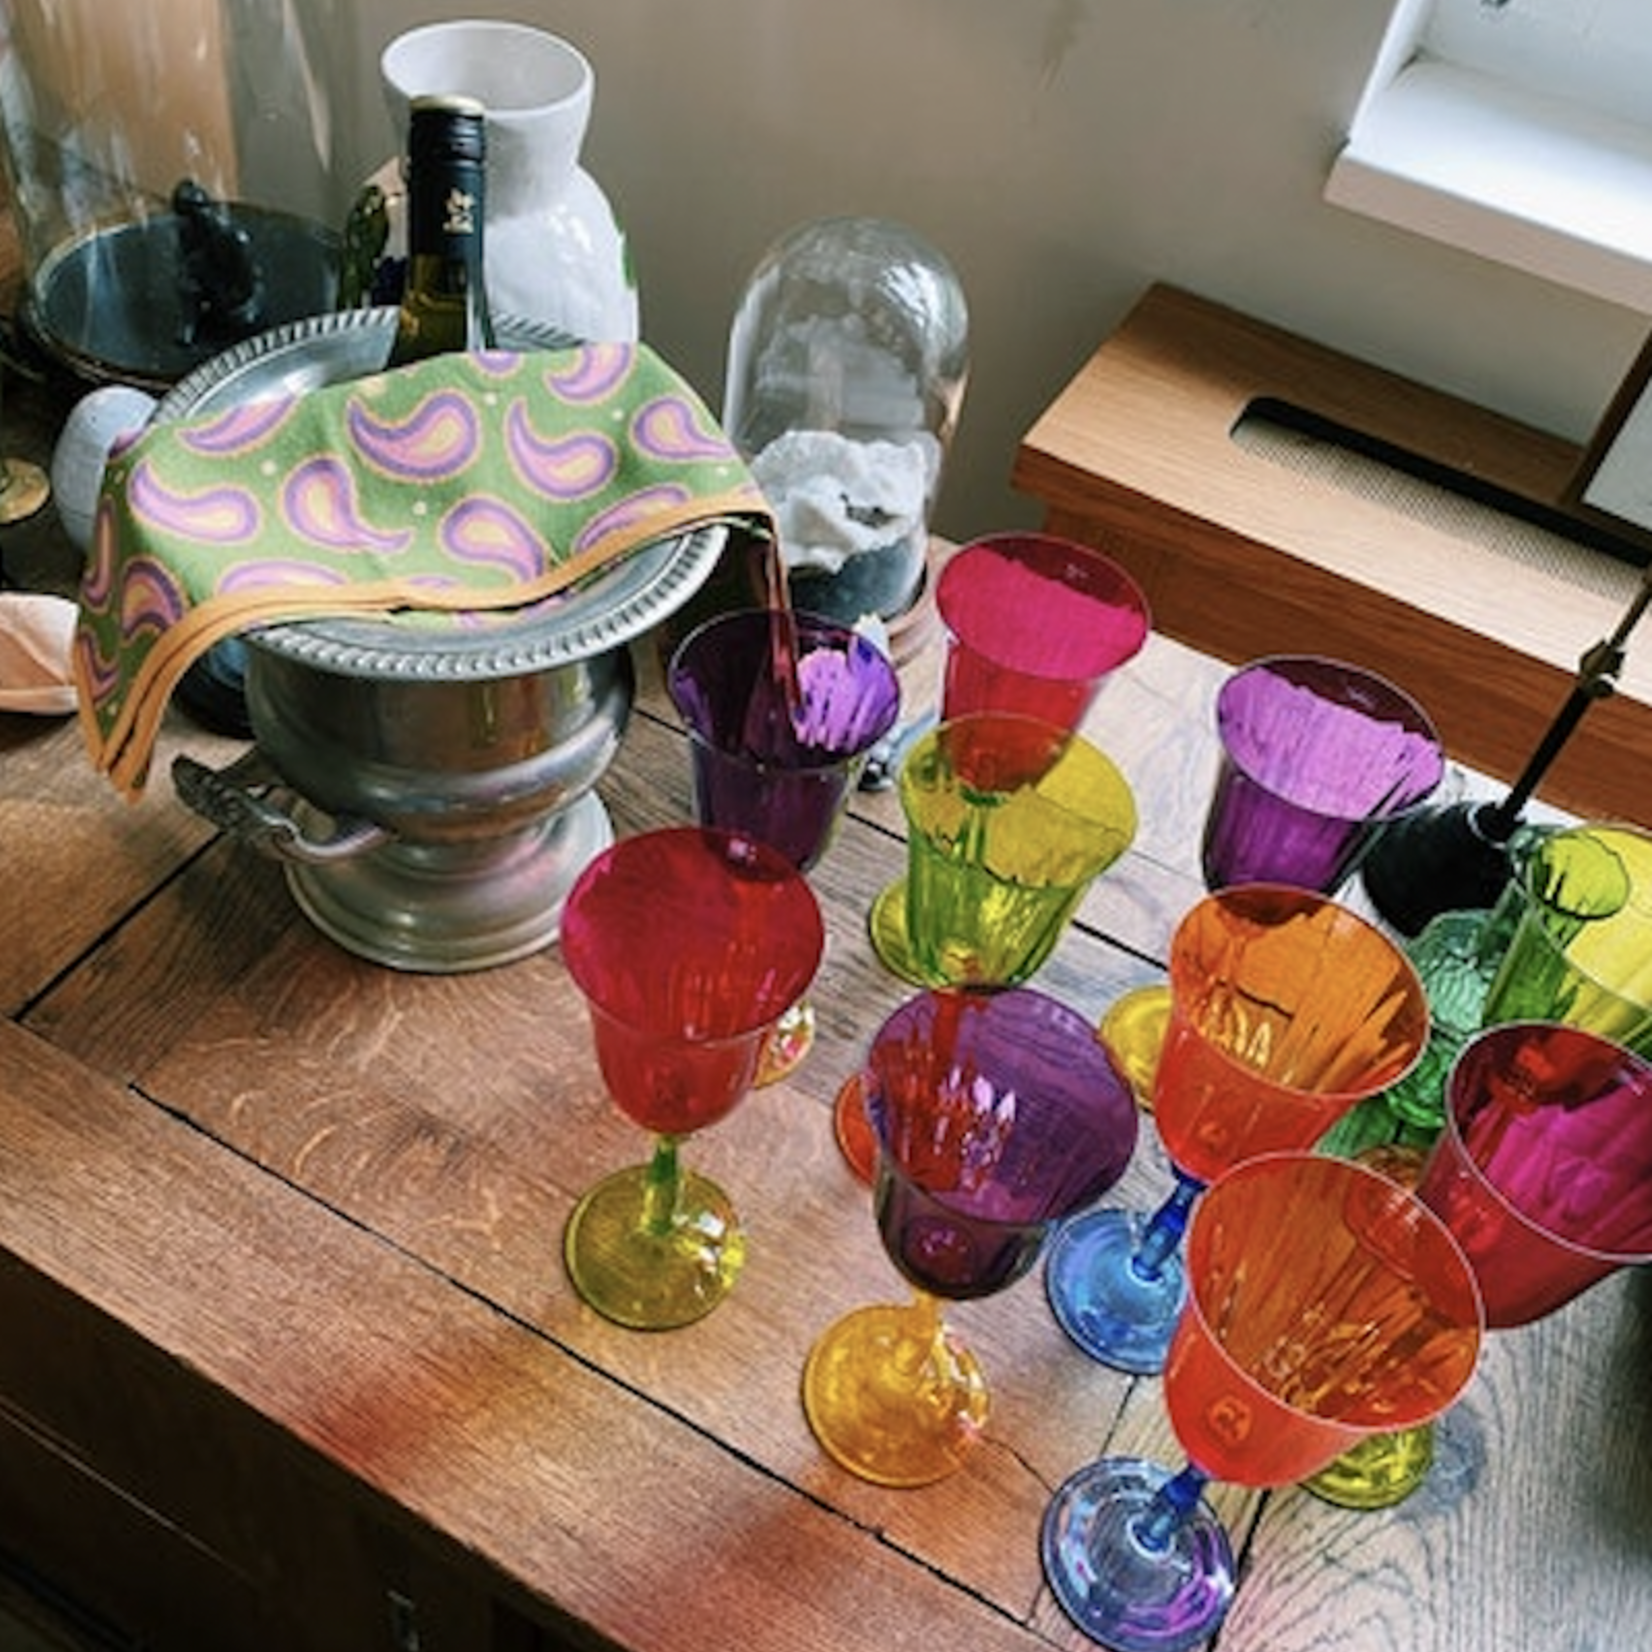 Anna+Nina - Multicoloured Wine Glass - paars